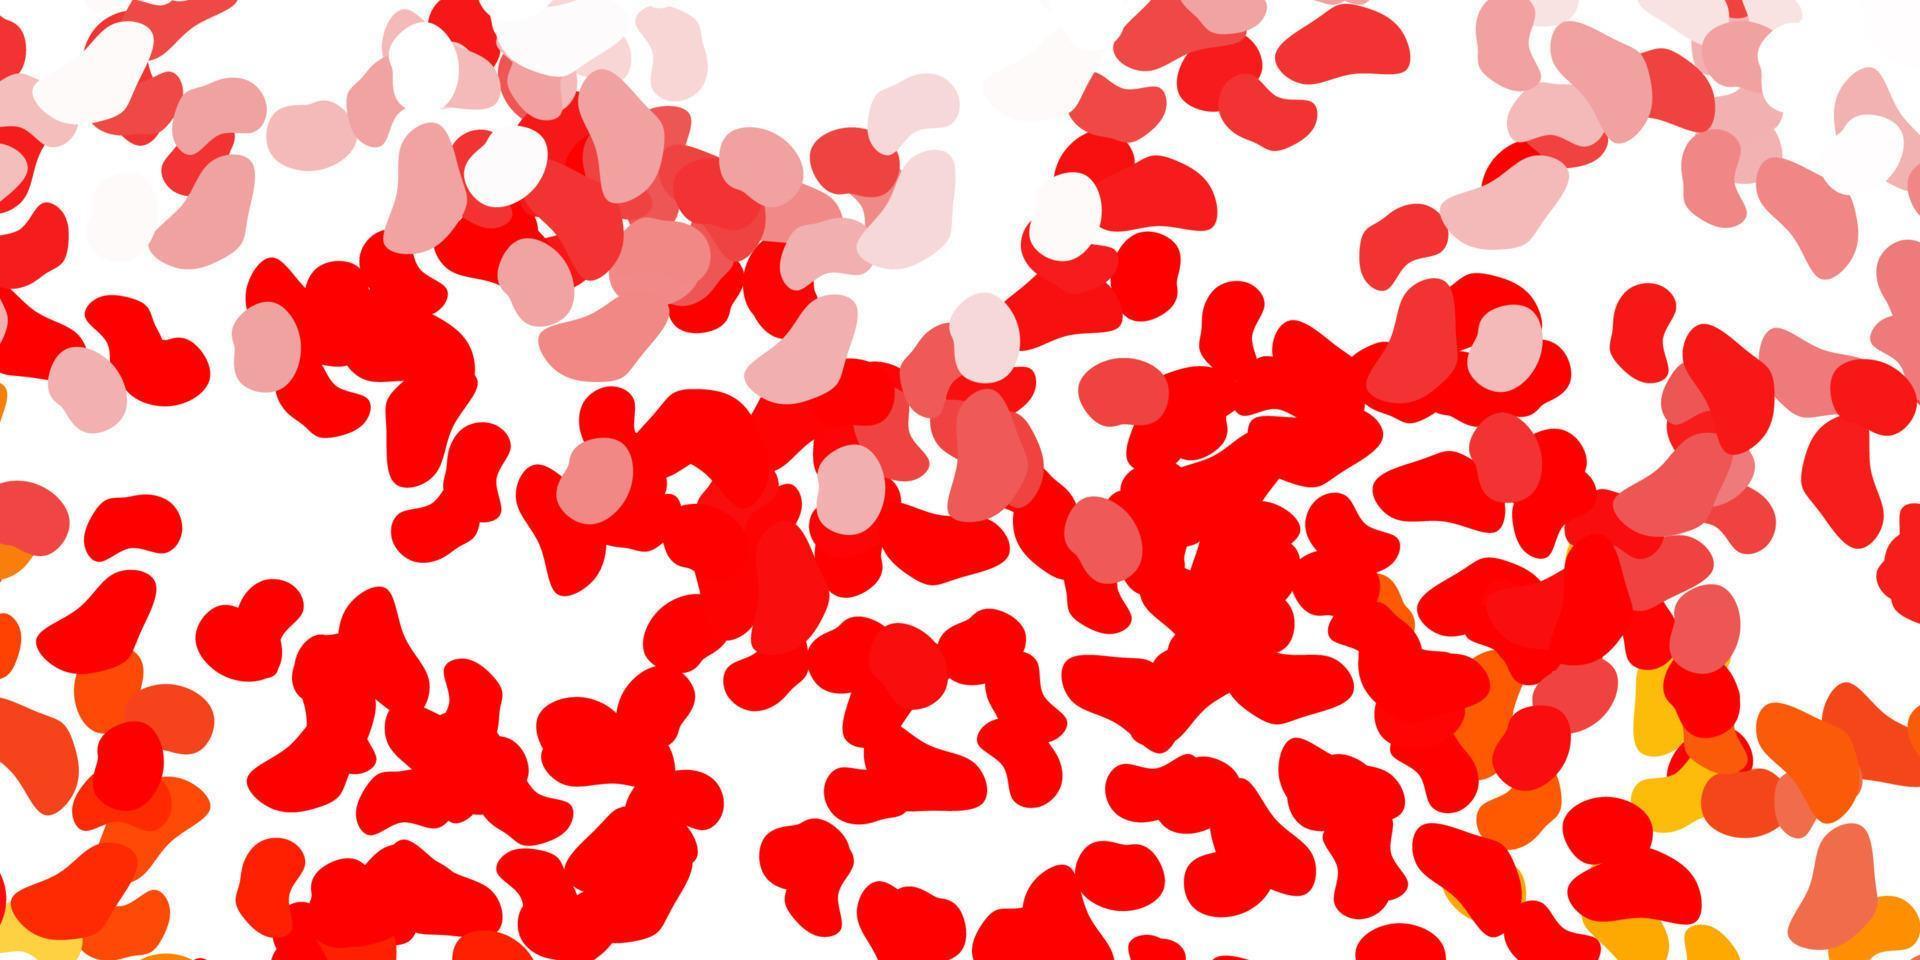 textura de vector rojo claro con formas de memphis.